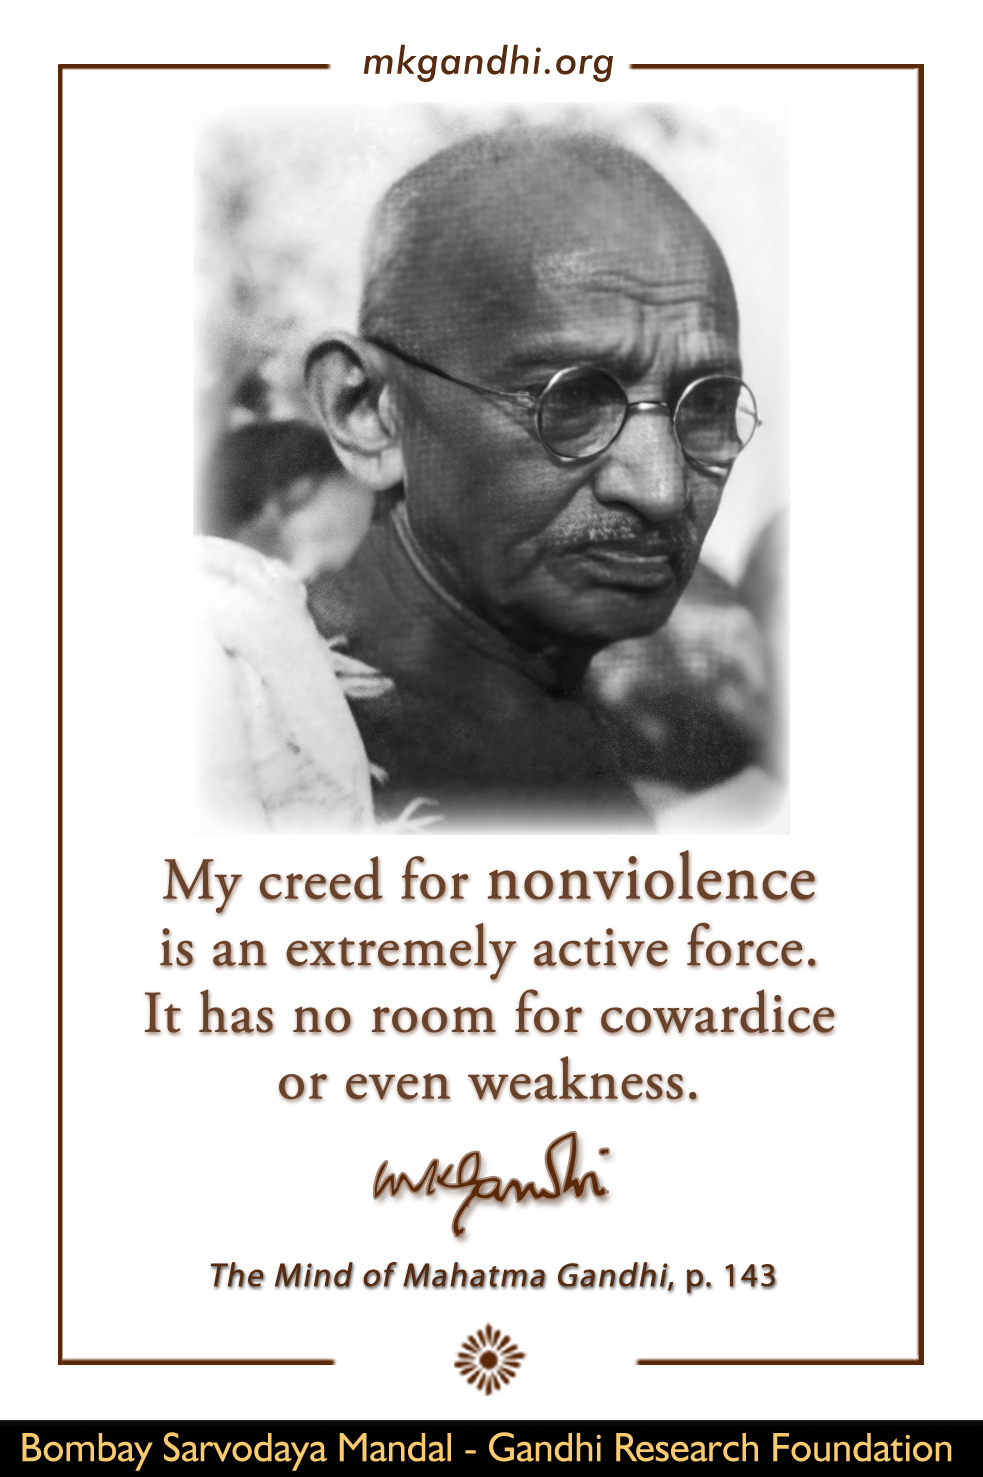 Mahatma Gandhi Quote on Nonviolence, Ahimsa